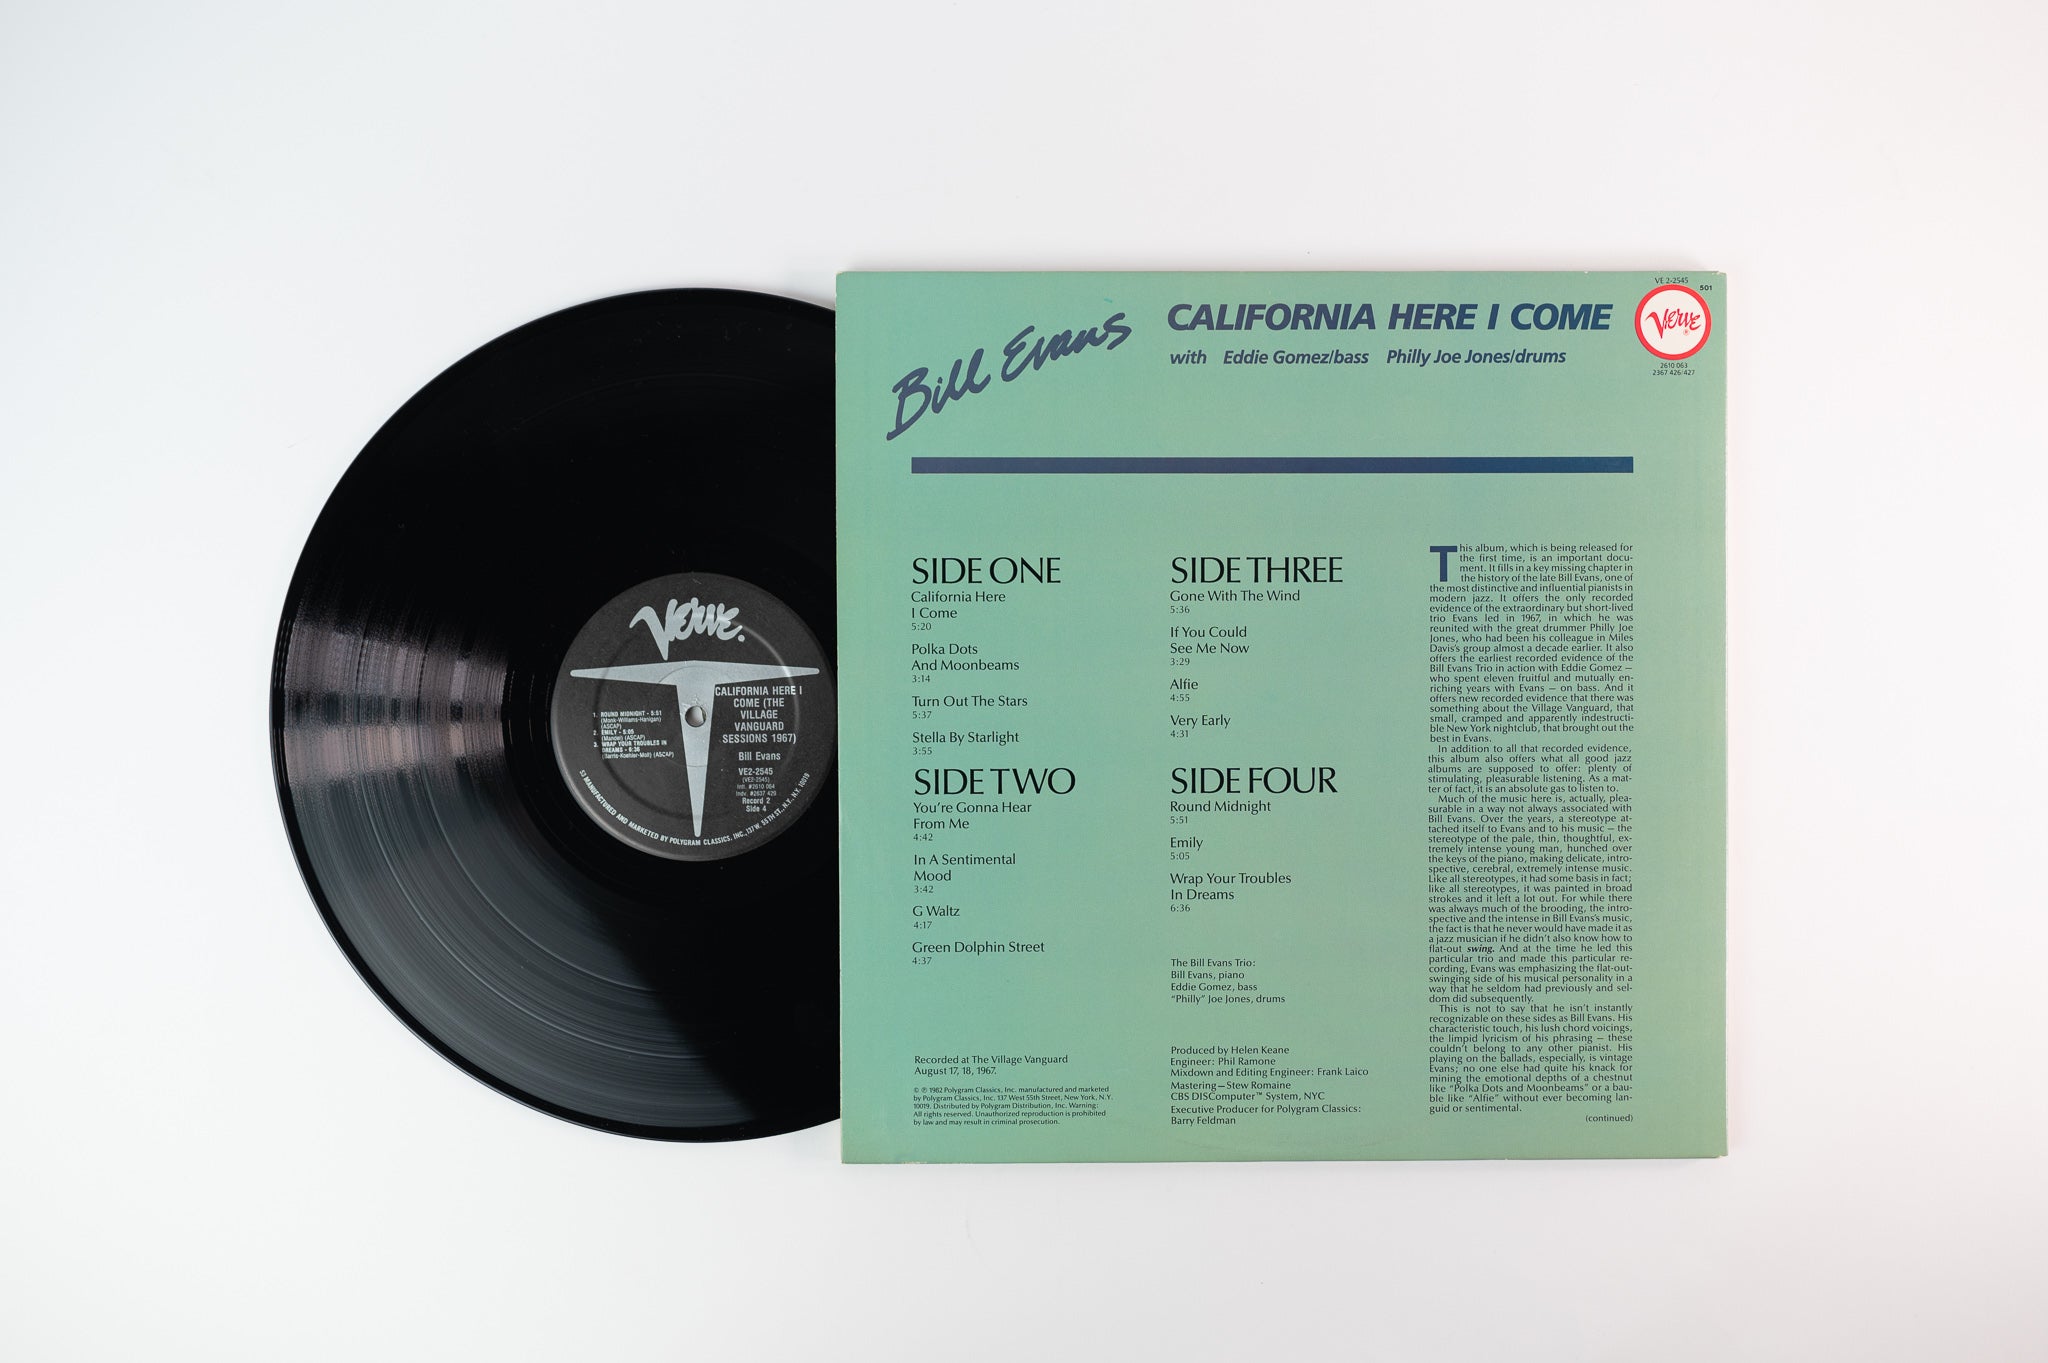 Bill Evans - California Here I Come on Verve